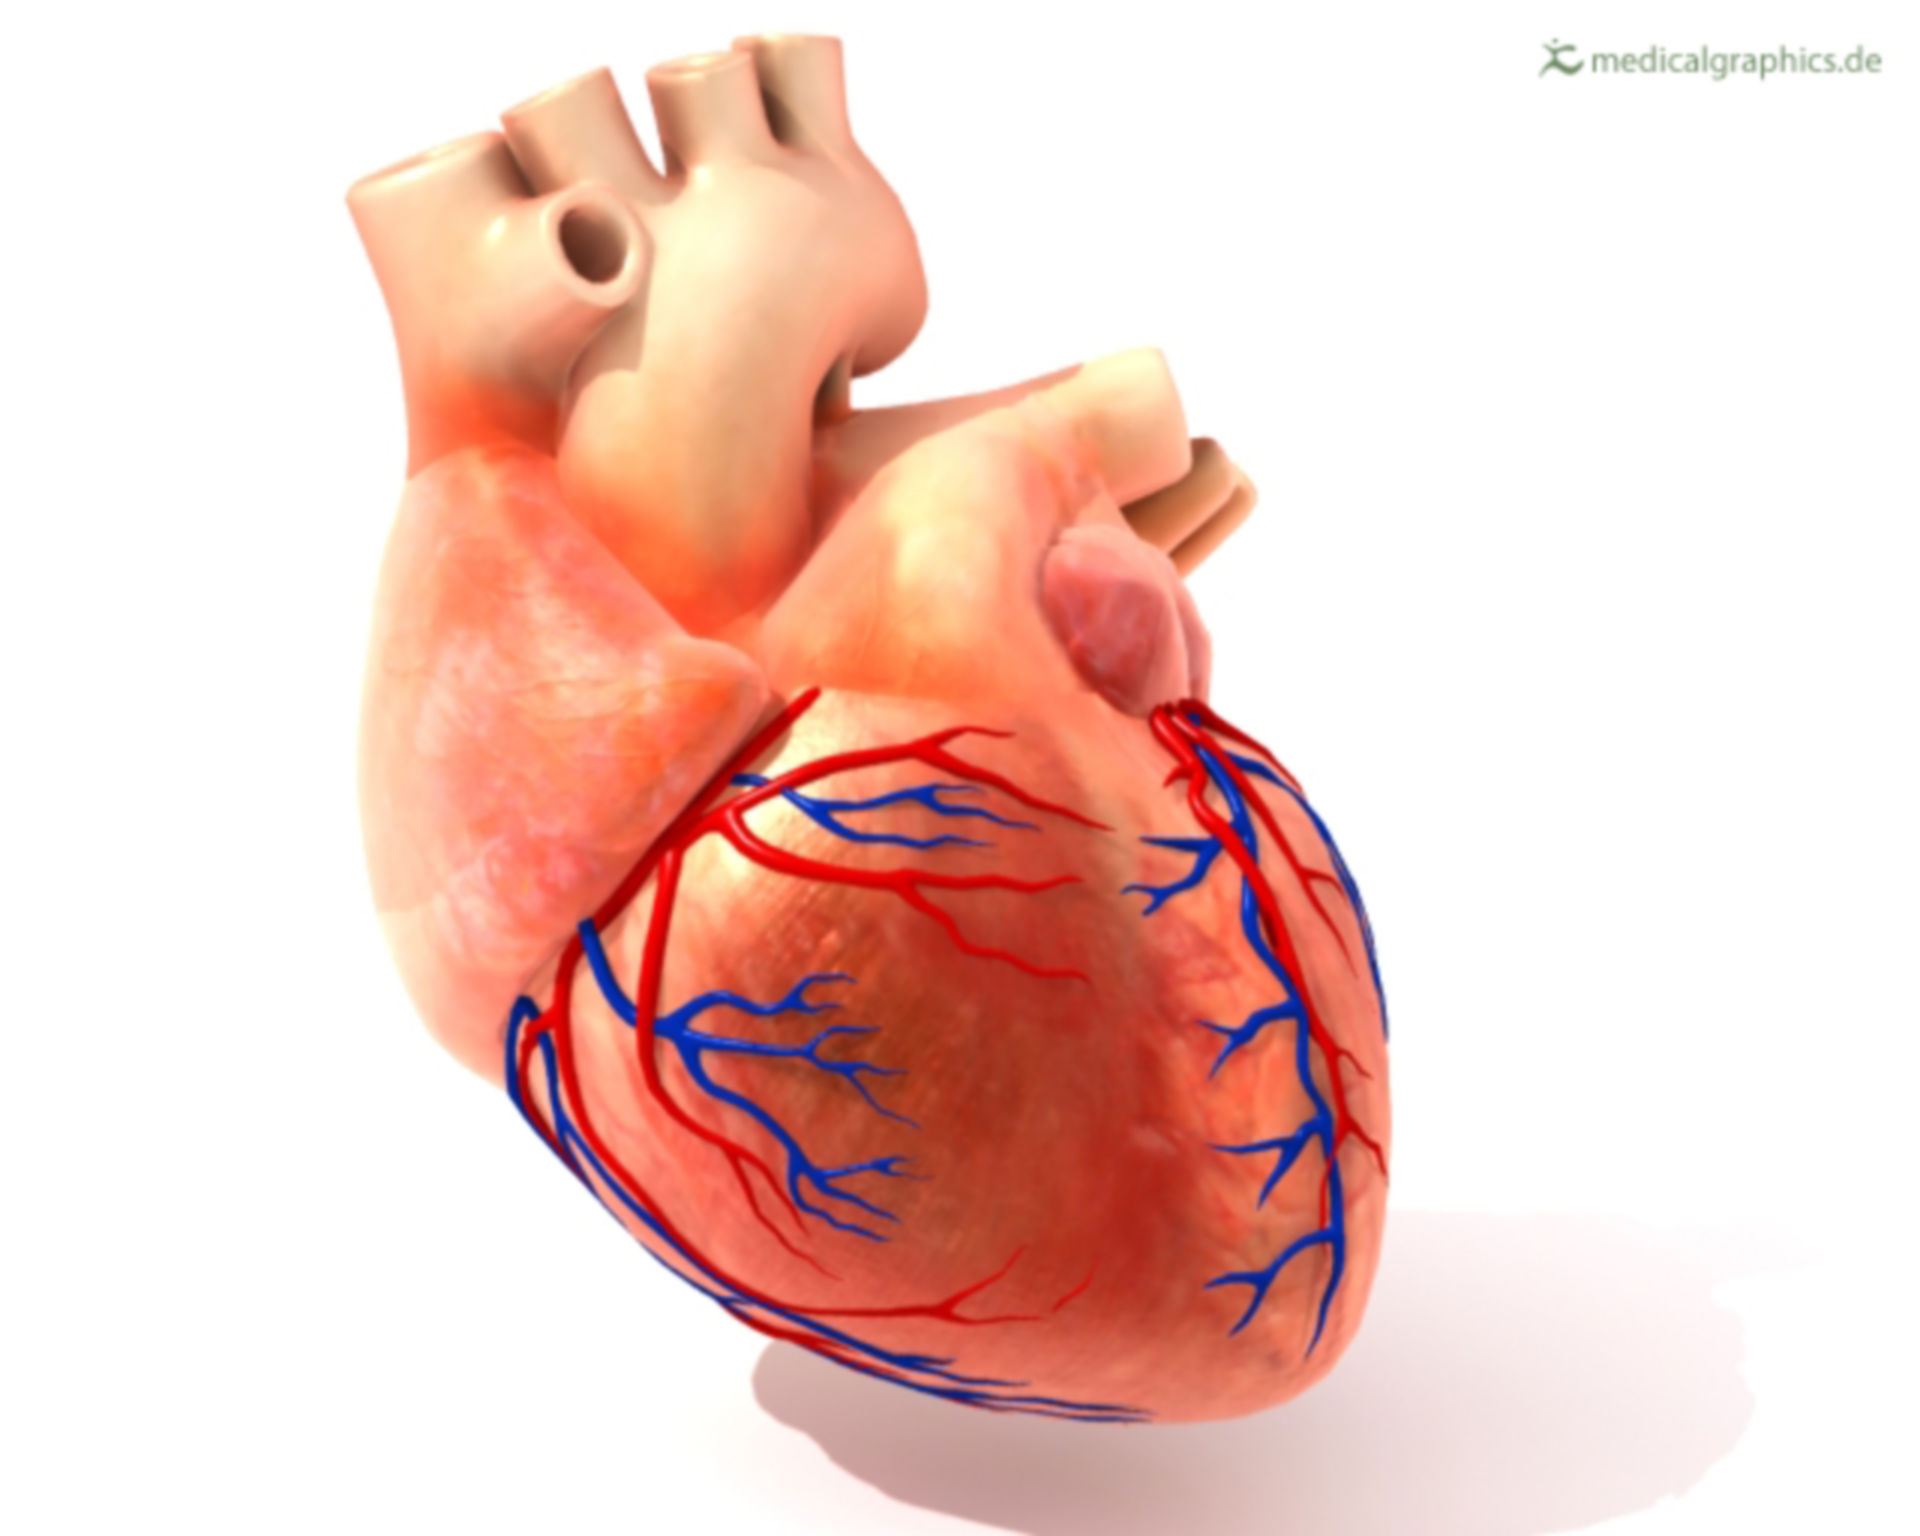 Heart (illustration)